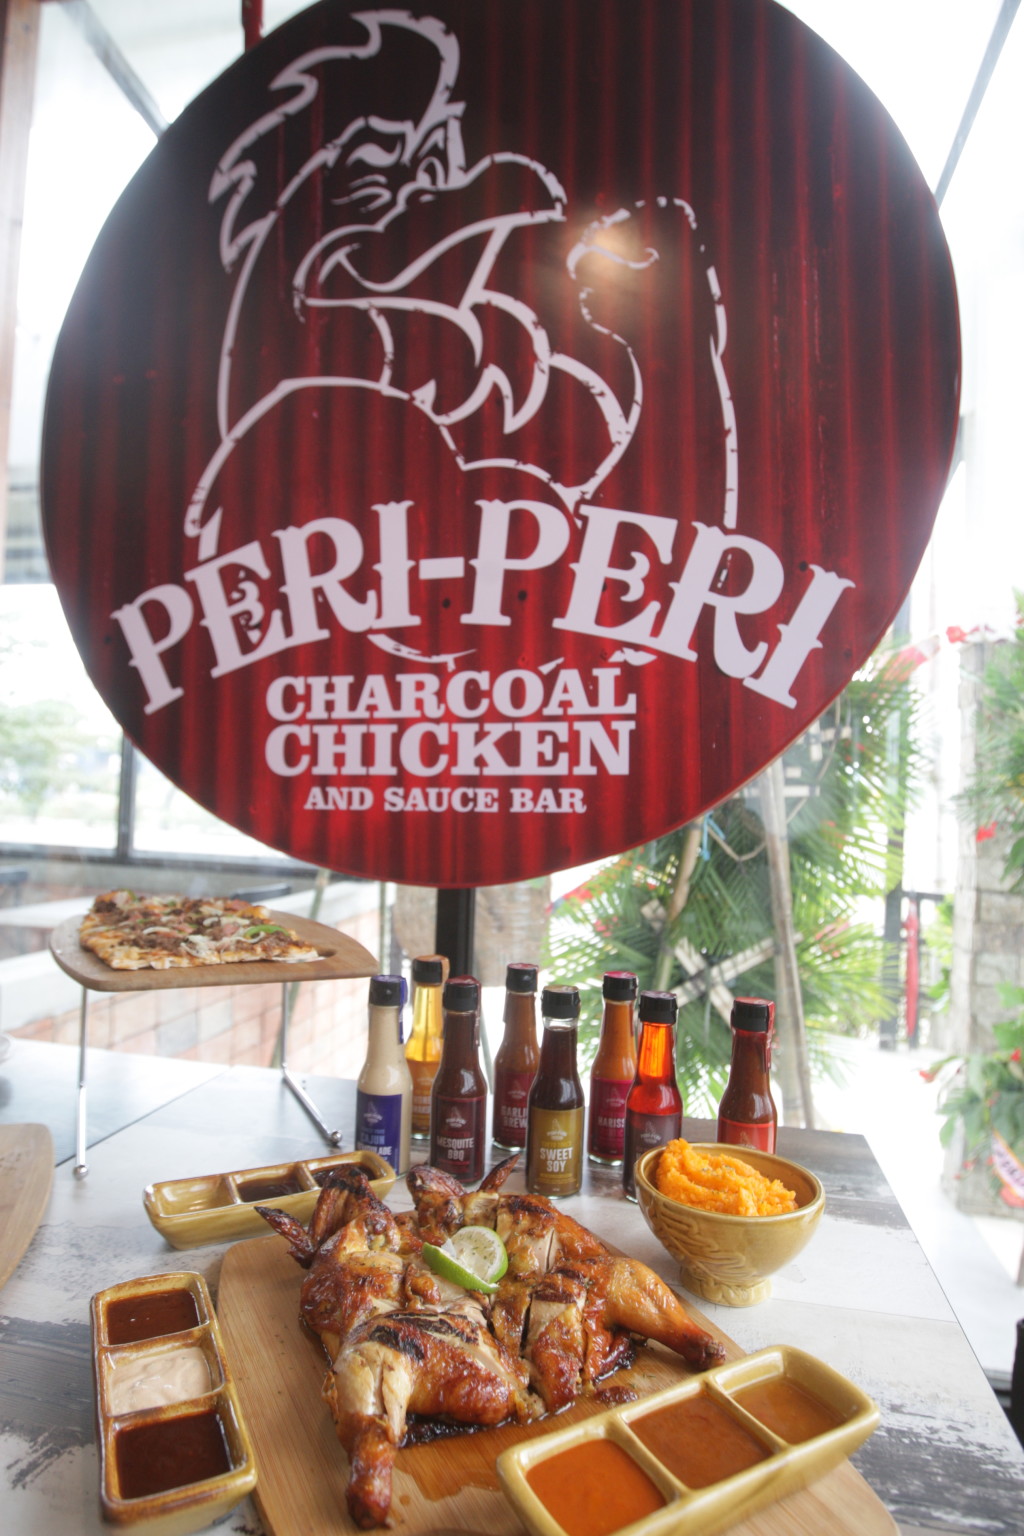 Peri-peri Charcoal Chicken and Sauce Bar